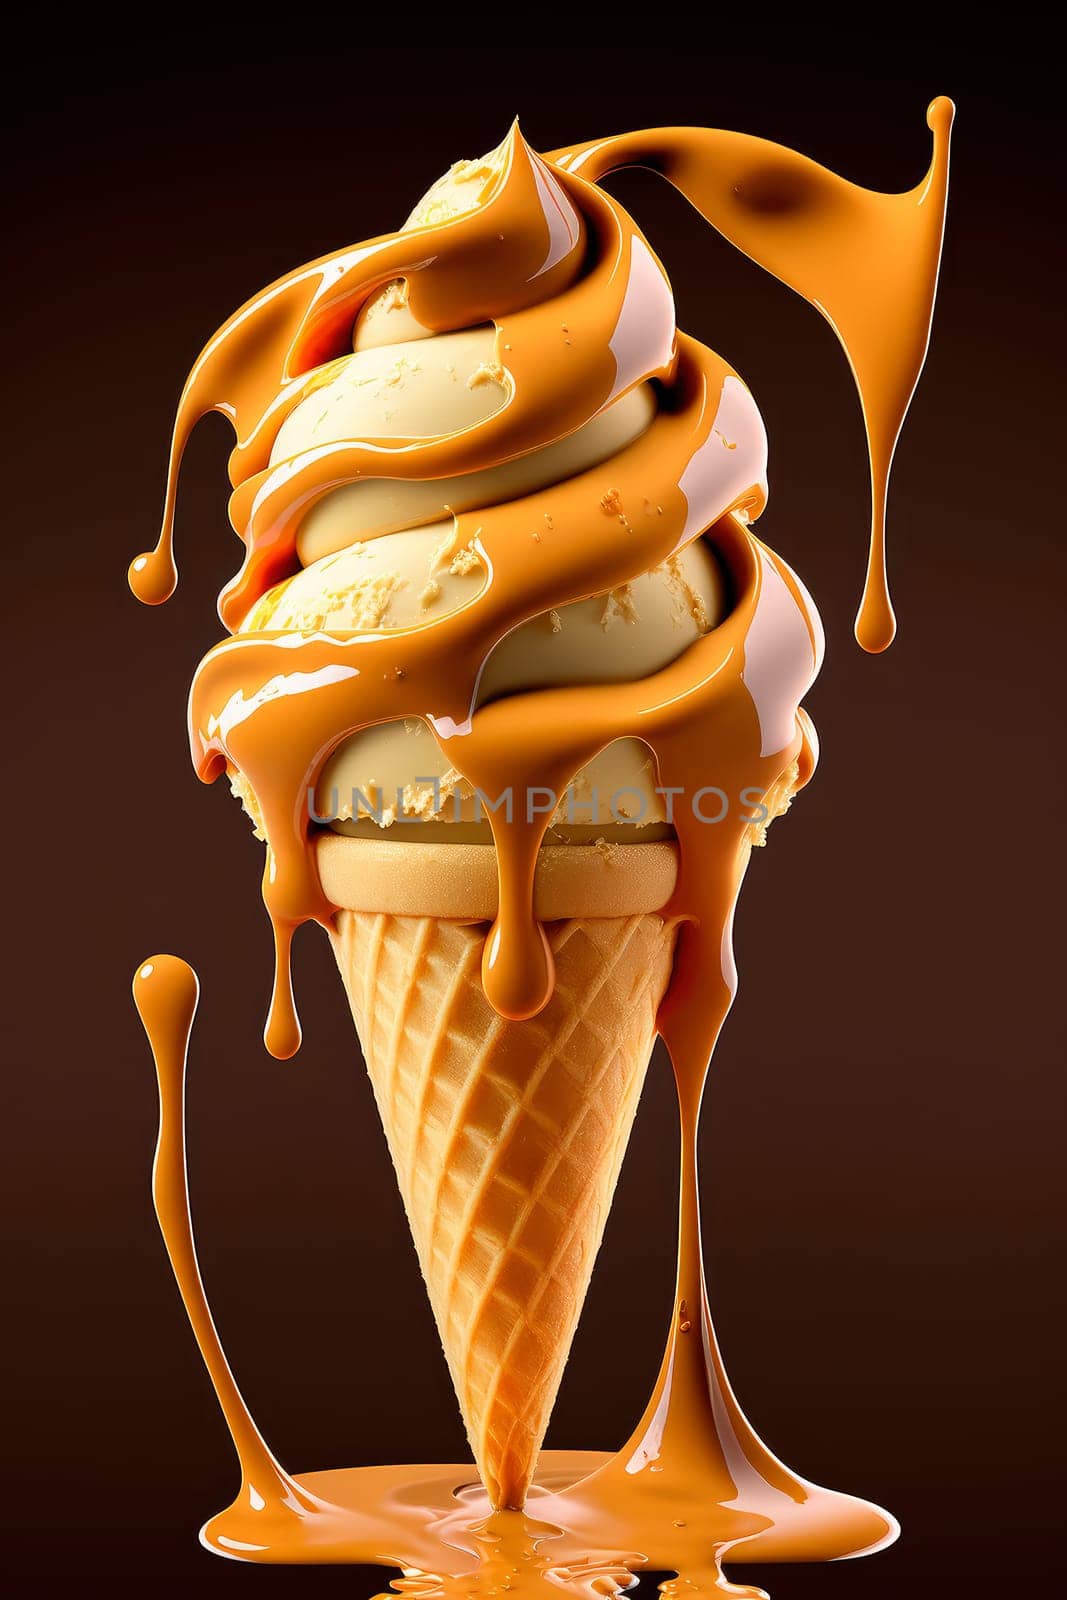 Ice cream cone with caramel. by yanadjana